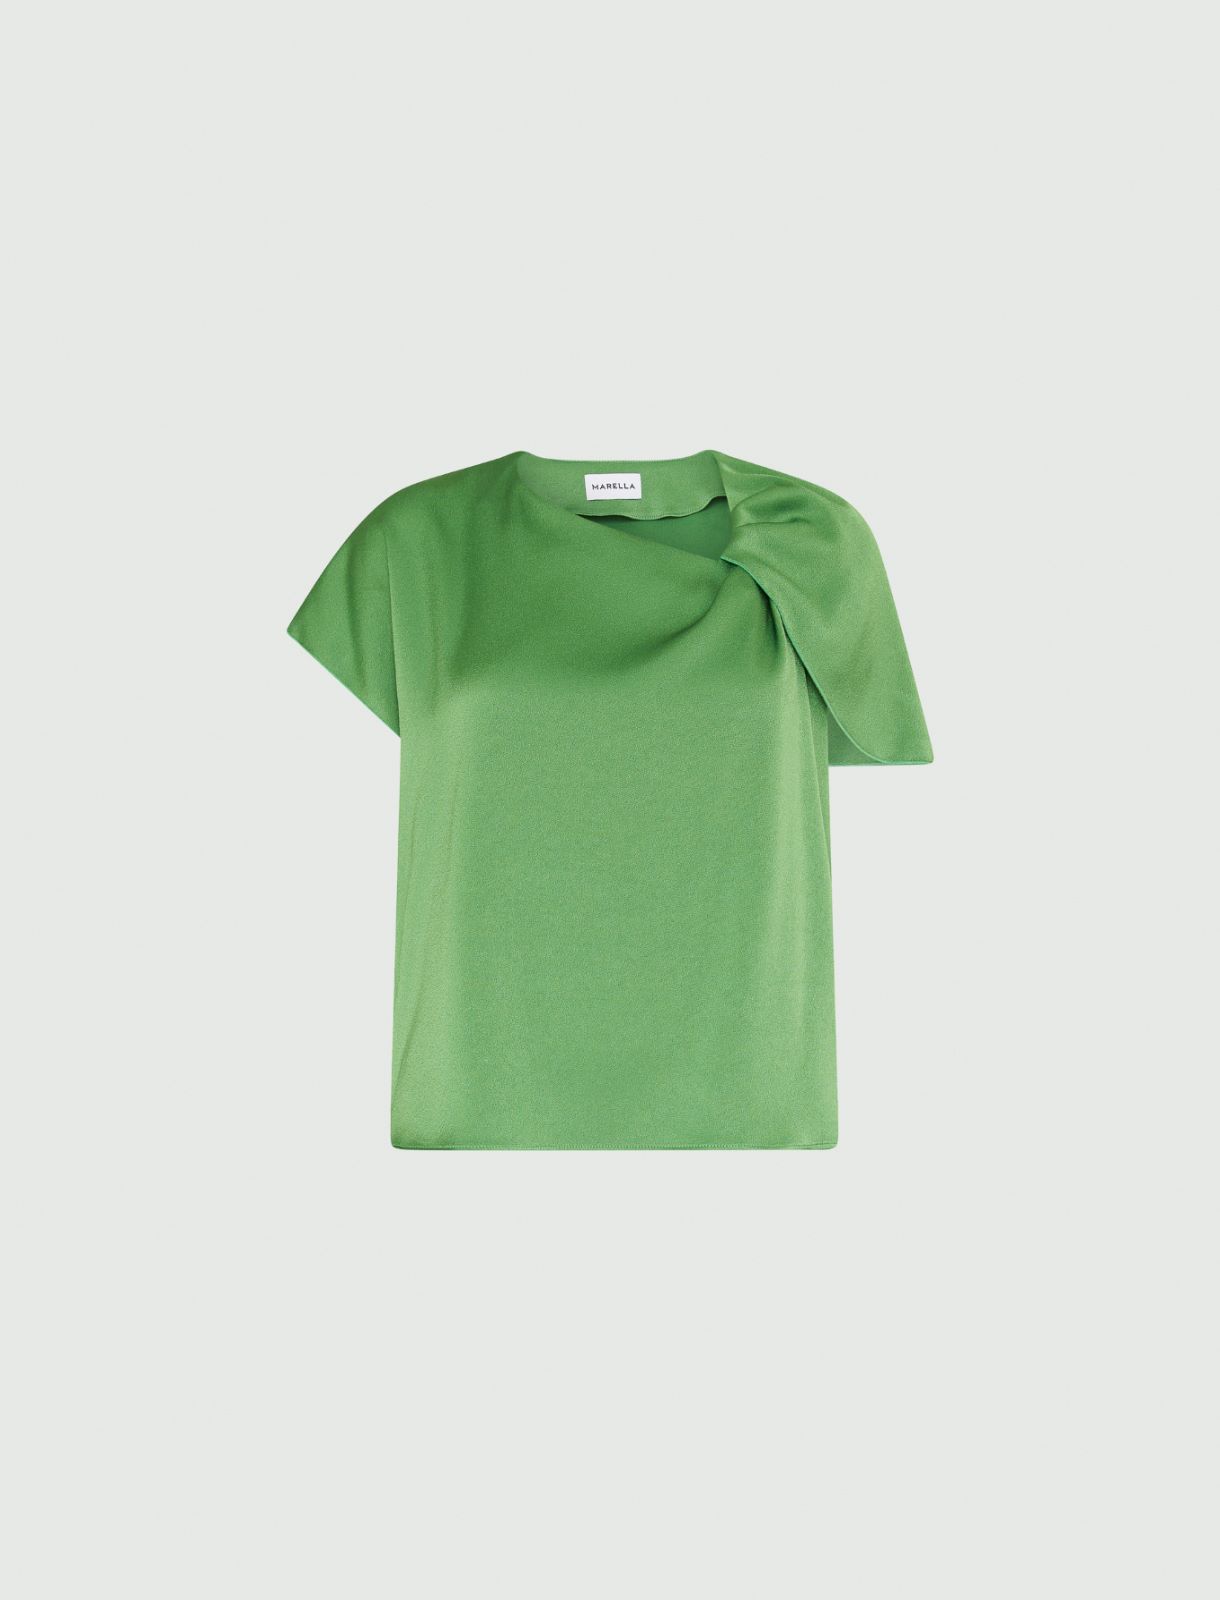 Satin blouse - Grass green - Marella - 5